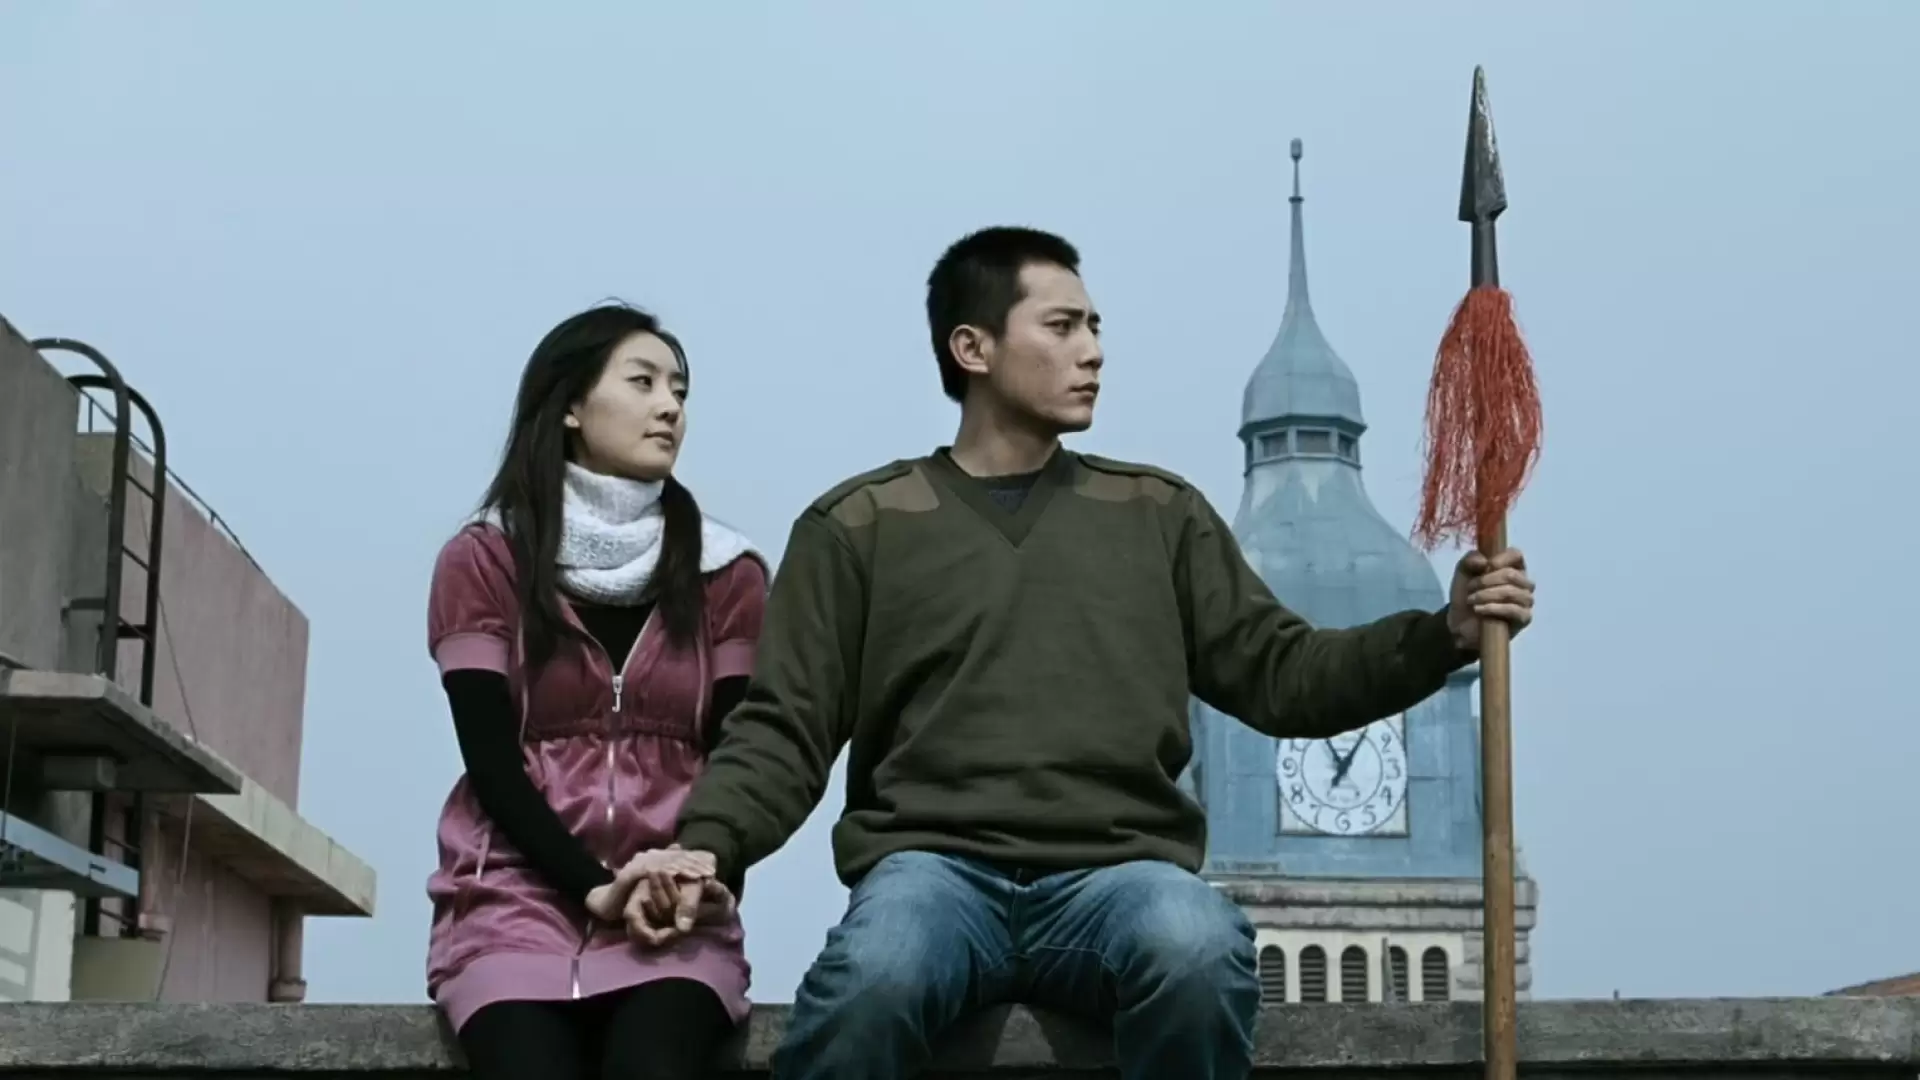 دانلود فیلم Ying han 2008